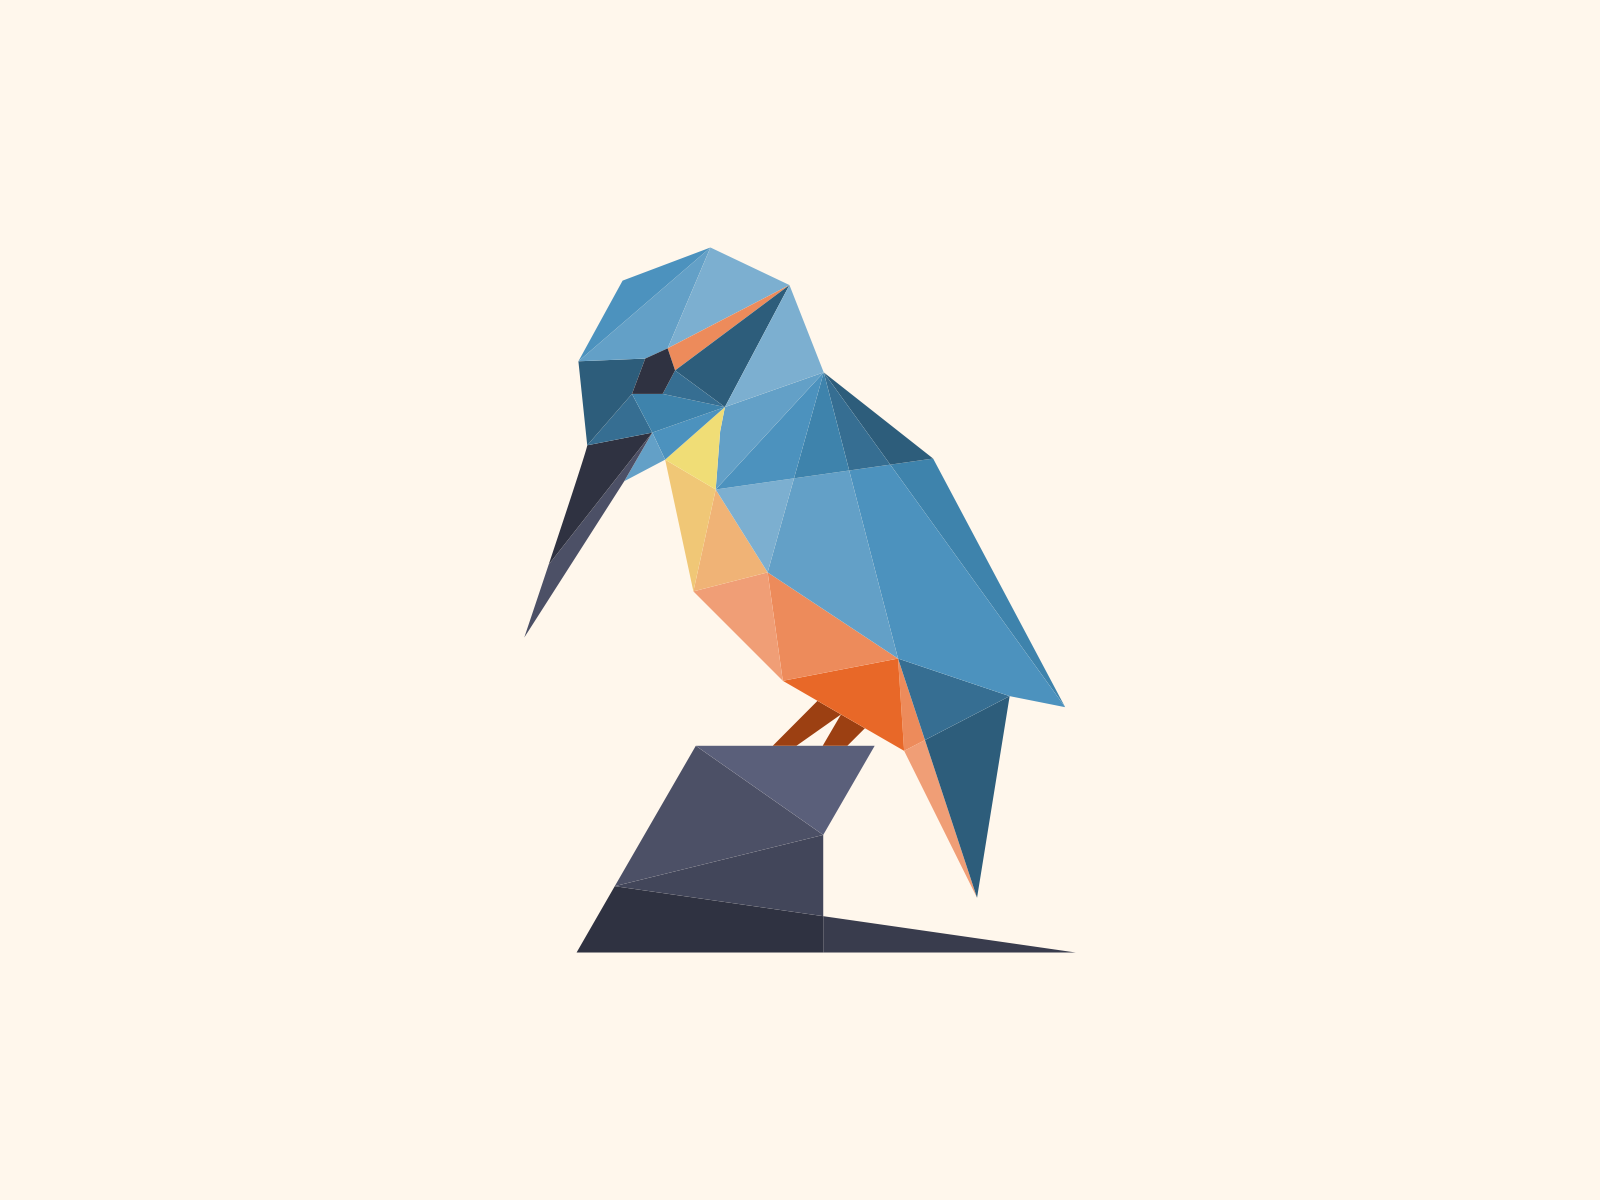 Kingfisher Mascot Logo, Logos ft. design & graphic - Envato Elements